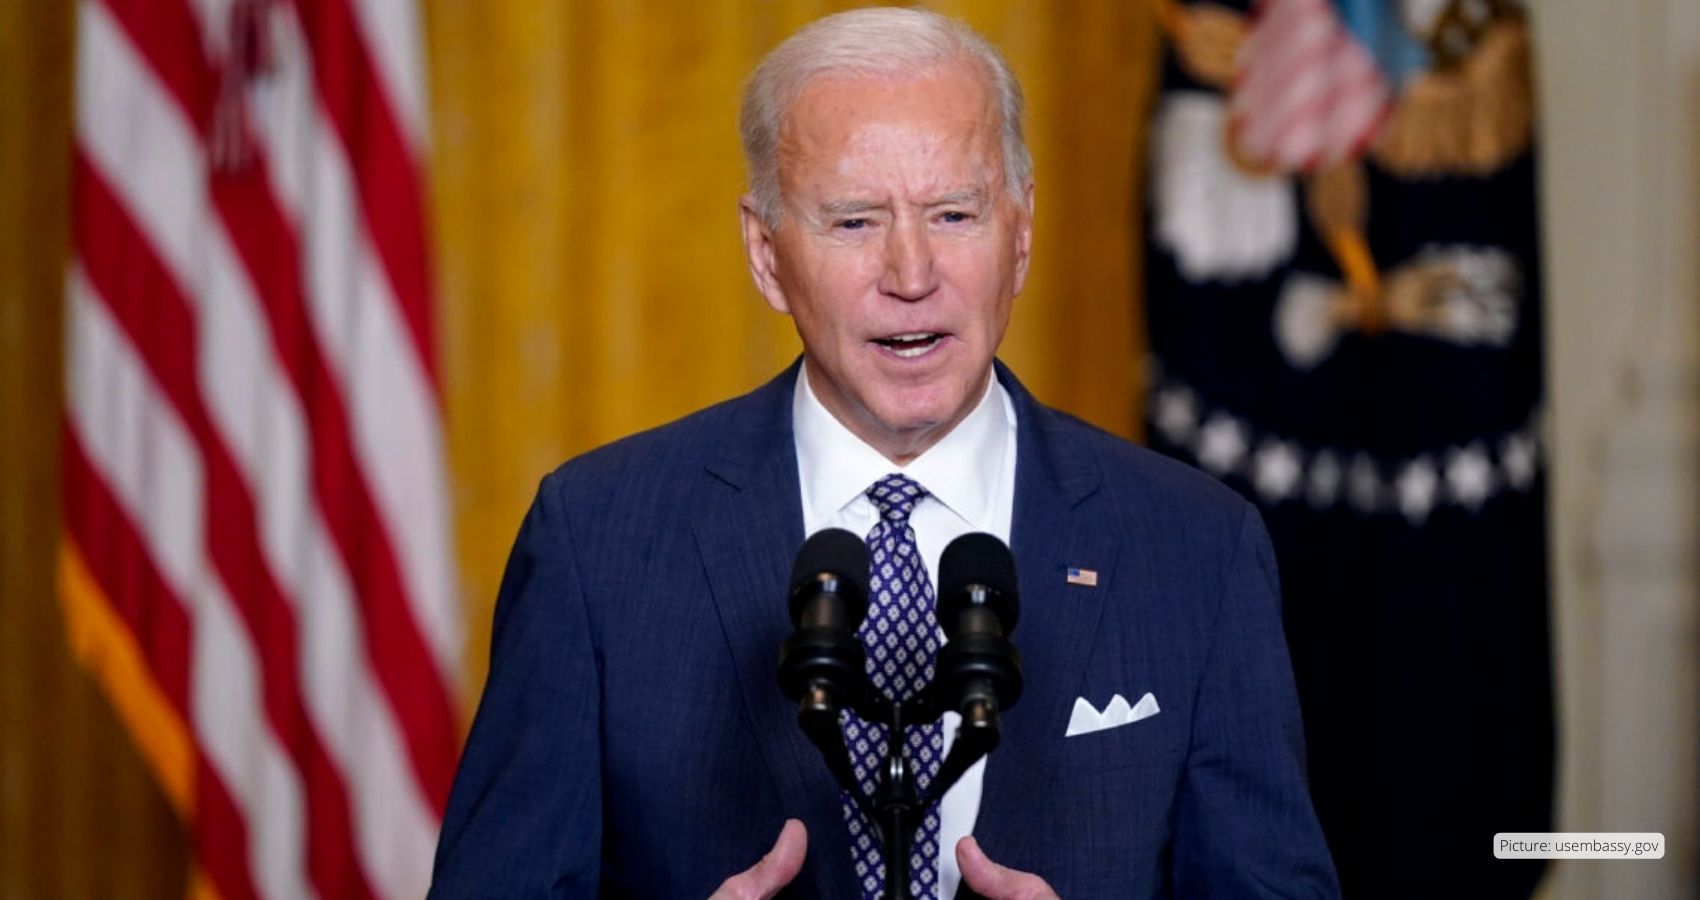 President Biden Returns to Scranton Roots, Advocates Tax Fairness in Pennsylvania Campaign Tour